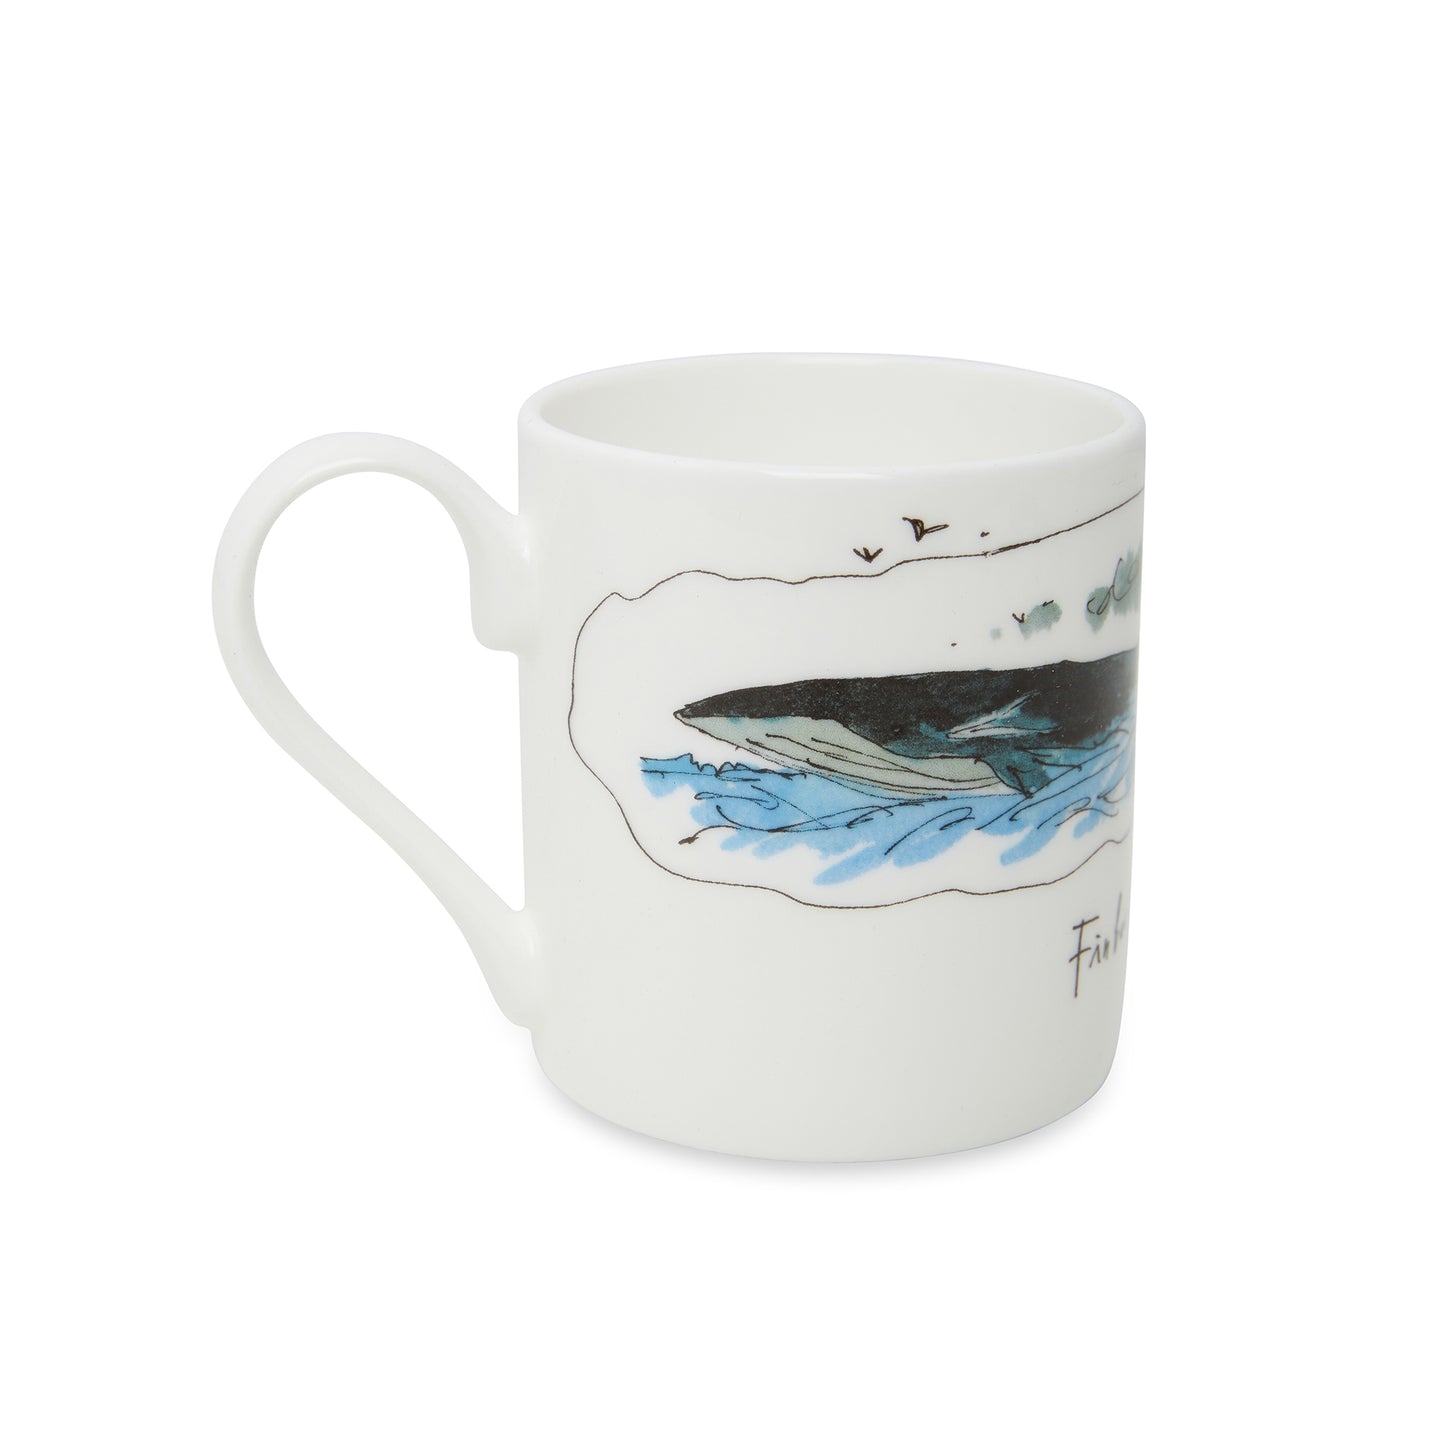 Mug featuring Quentin Blake Blue whale illustration